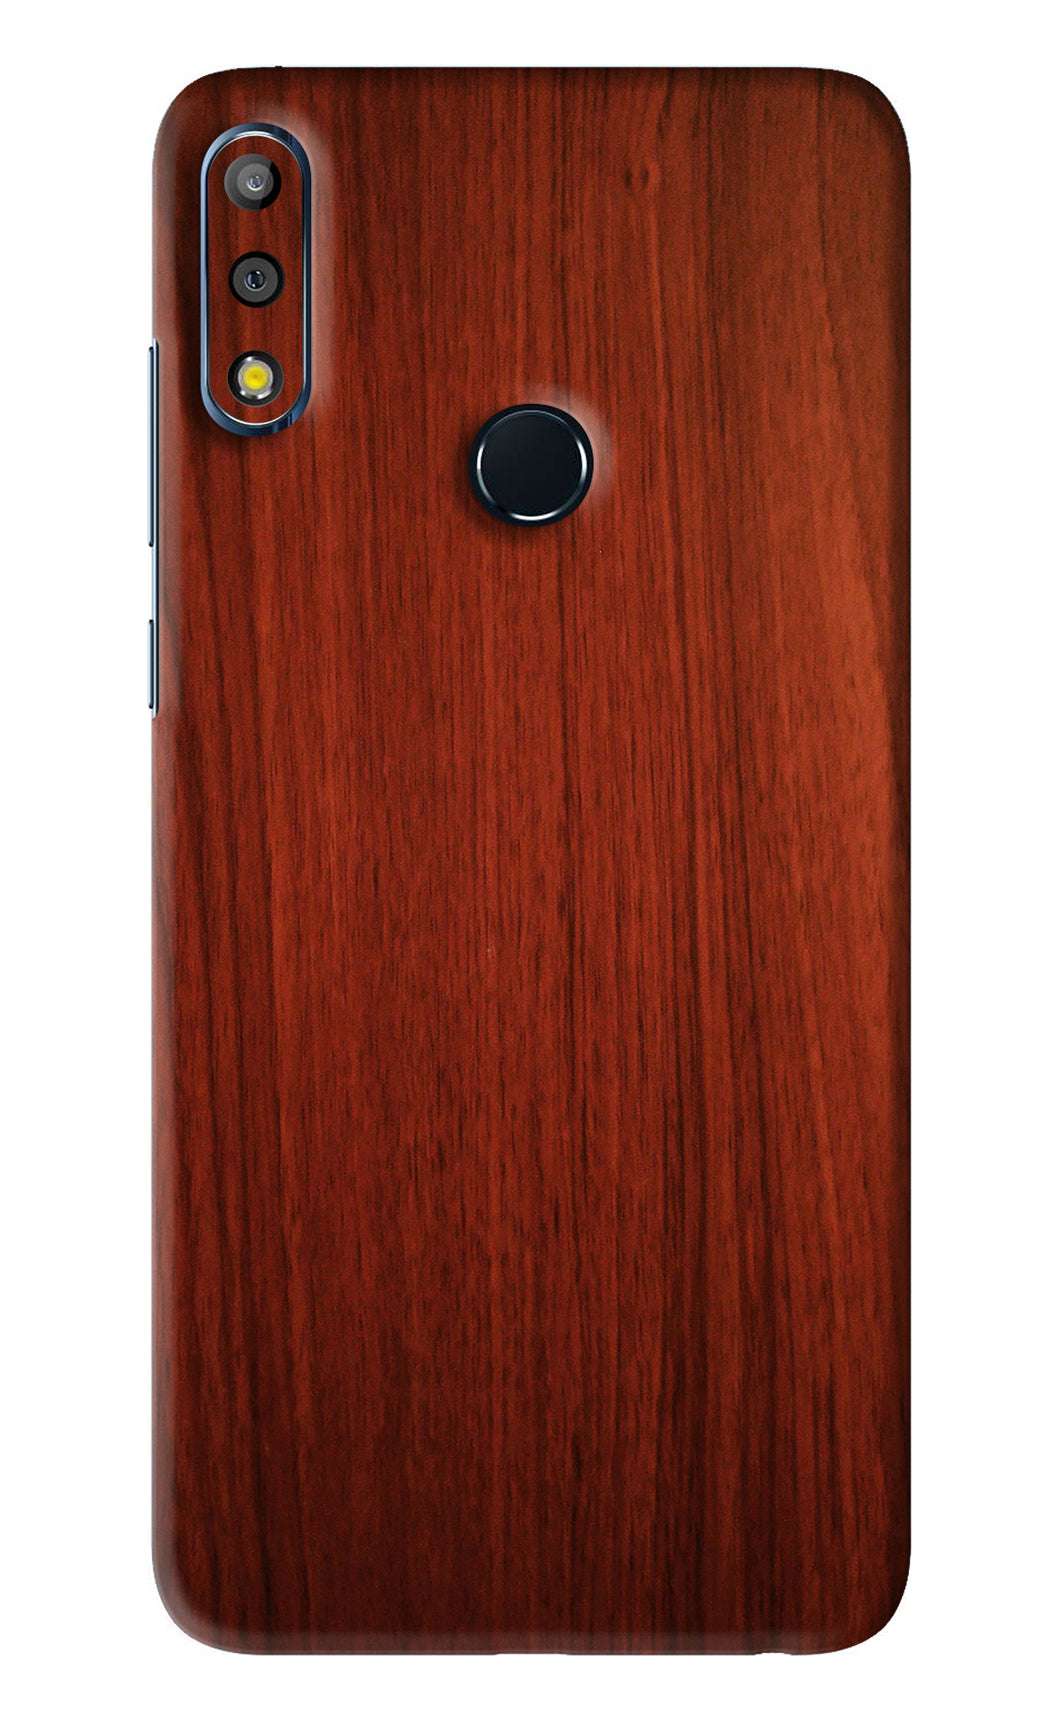 Wooden Plain Pattern Asus Zenfone Max Pro M2 Back Skin Wrap